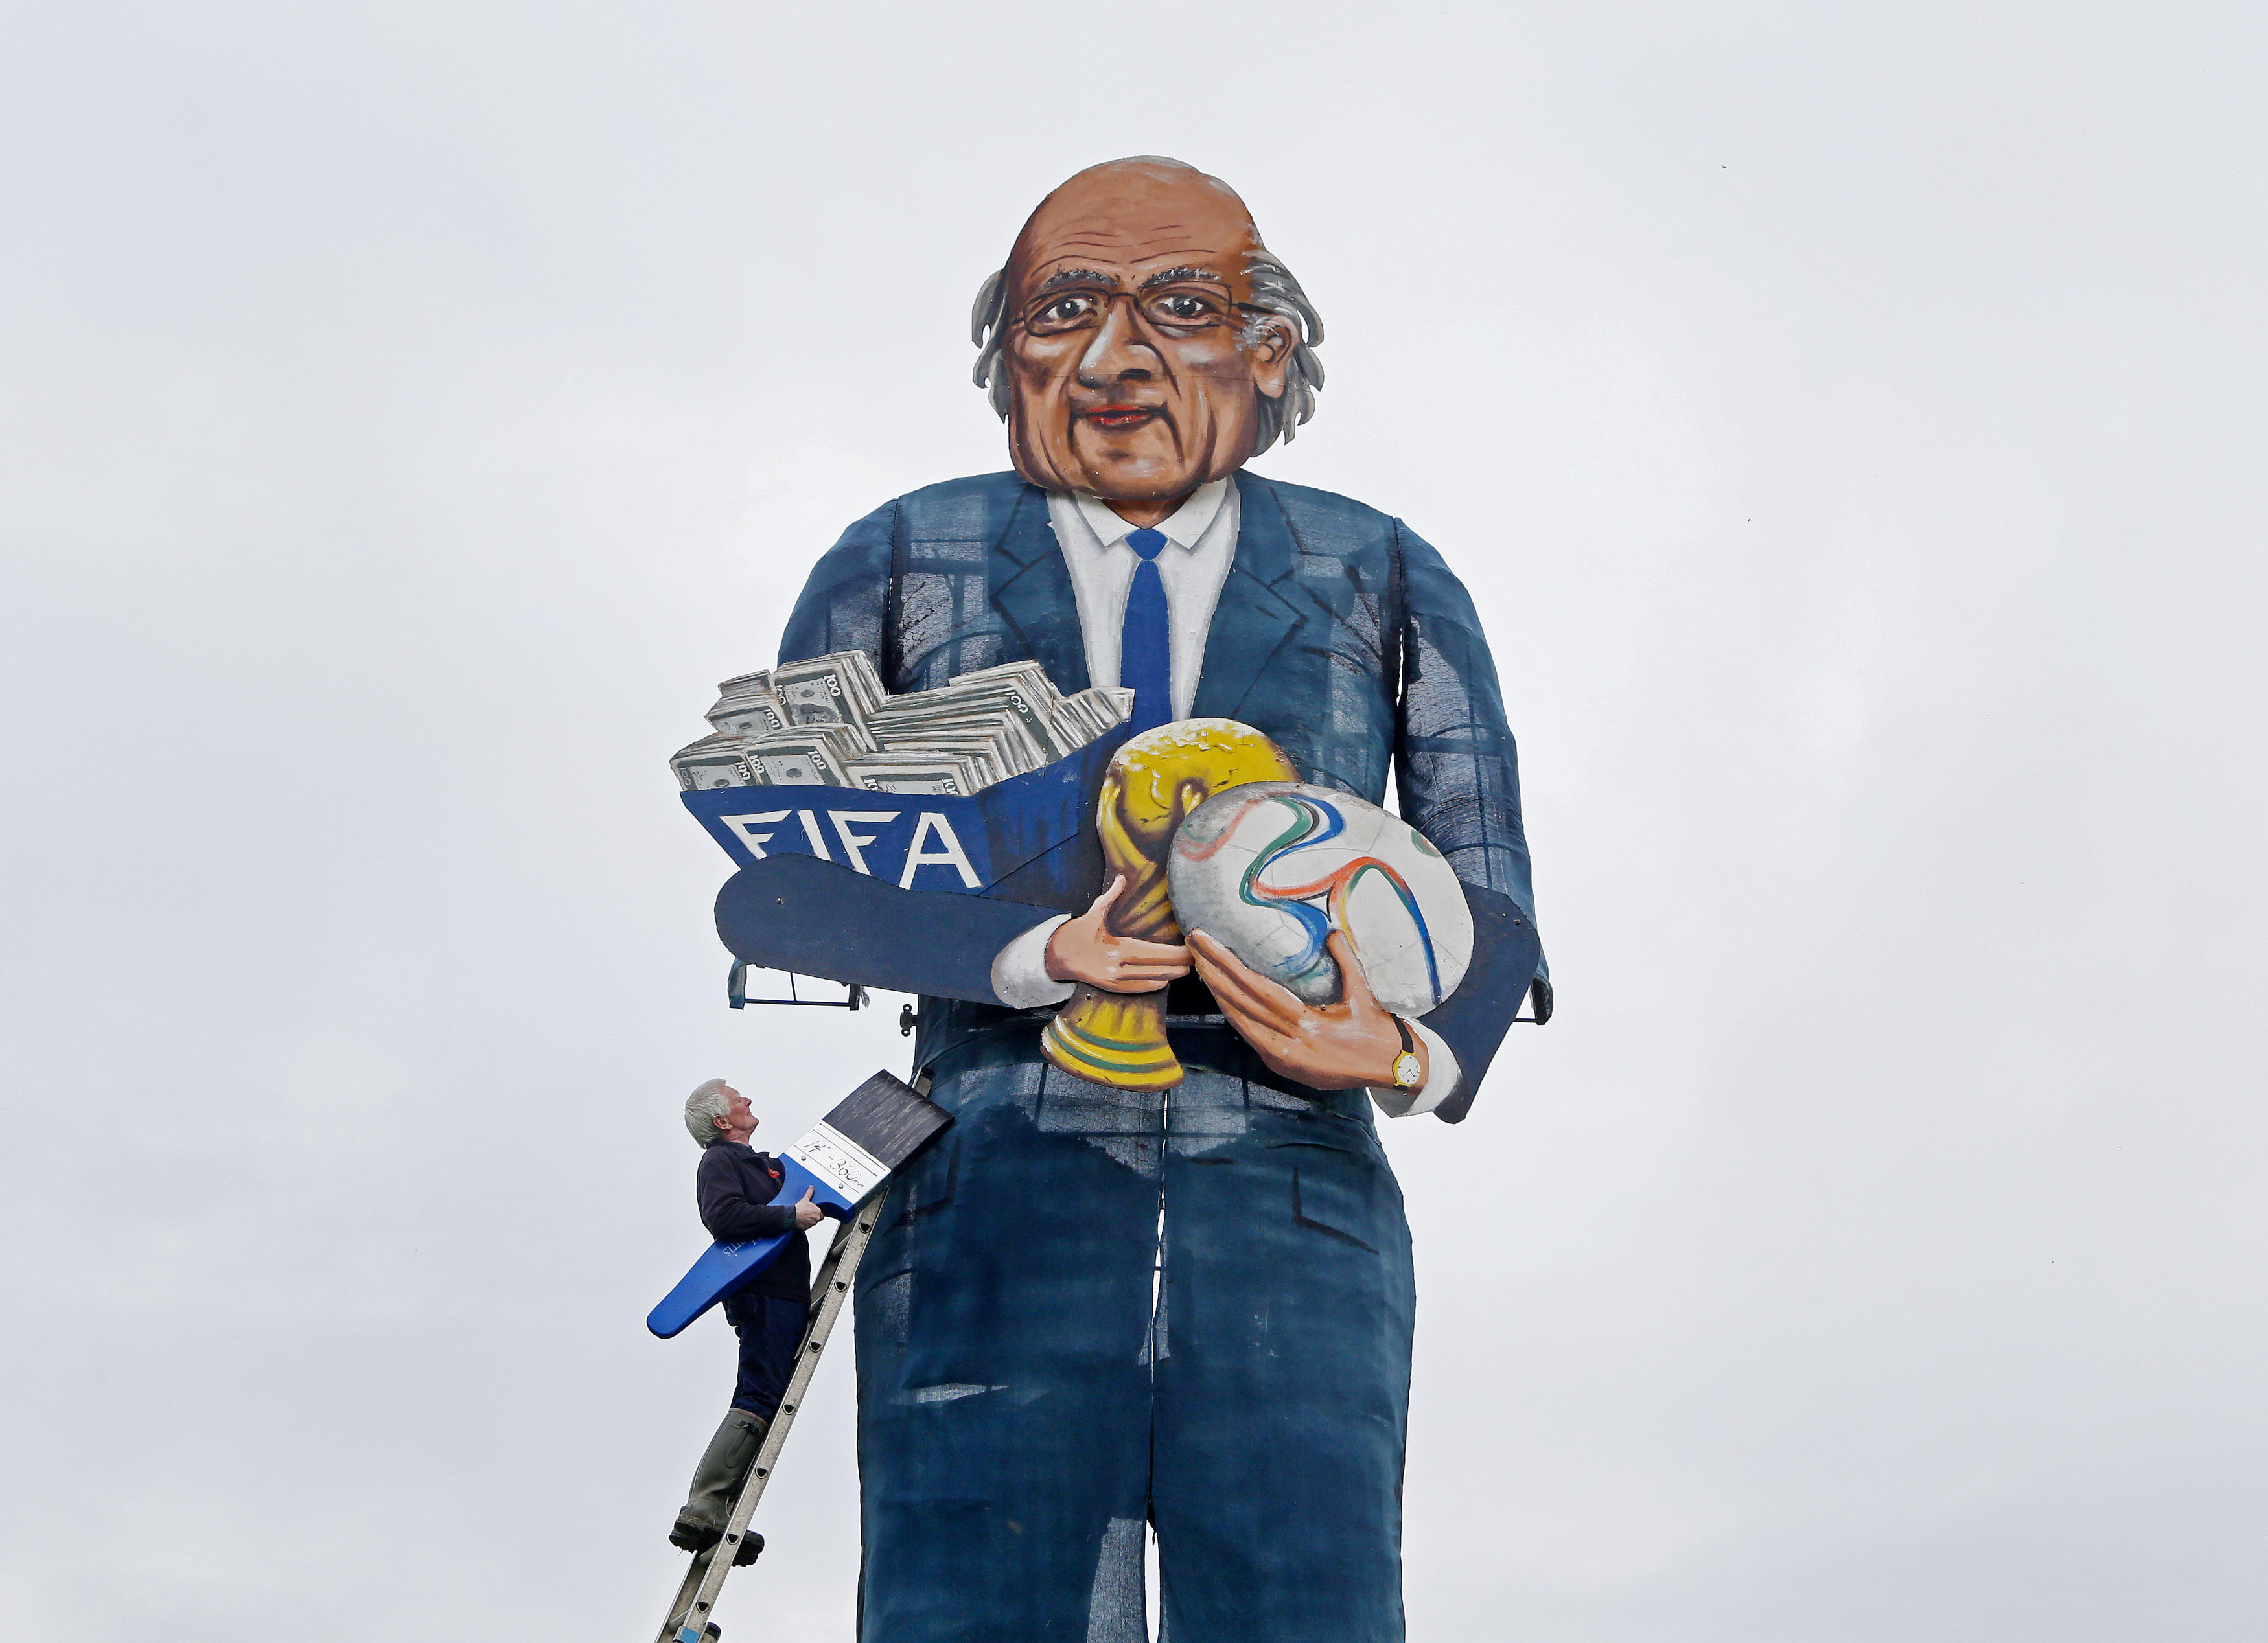 Artist Frank Shepherd puts the final touches to the Edenbridge Bonfire Society celebrity guy which has been unveiled as FIFA president Sepp Blatter, in Edenbridge, Kent, in 2015